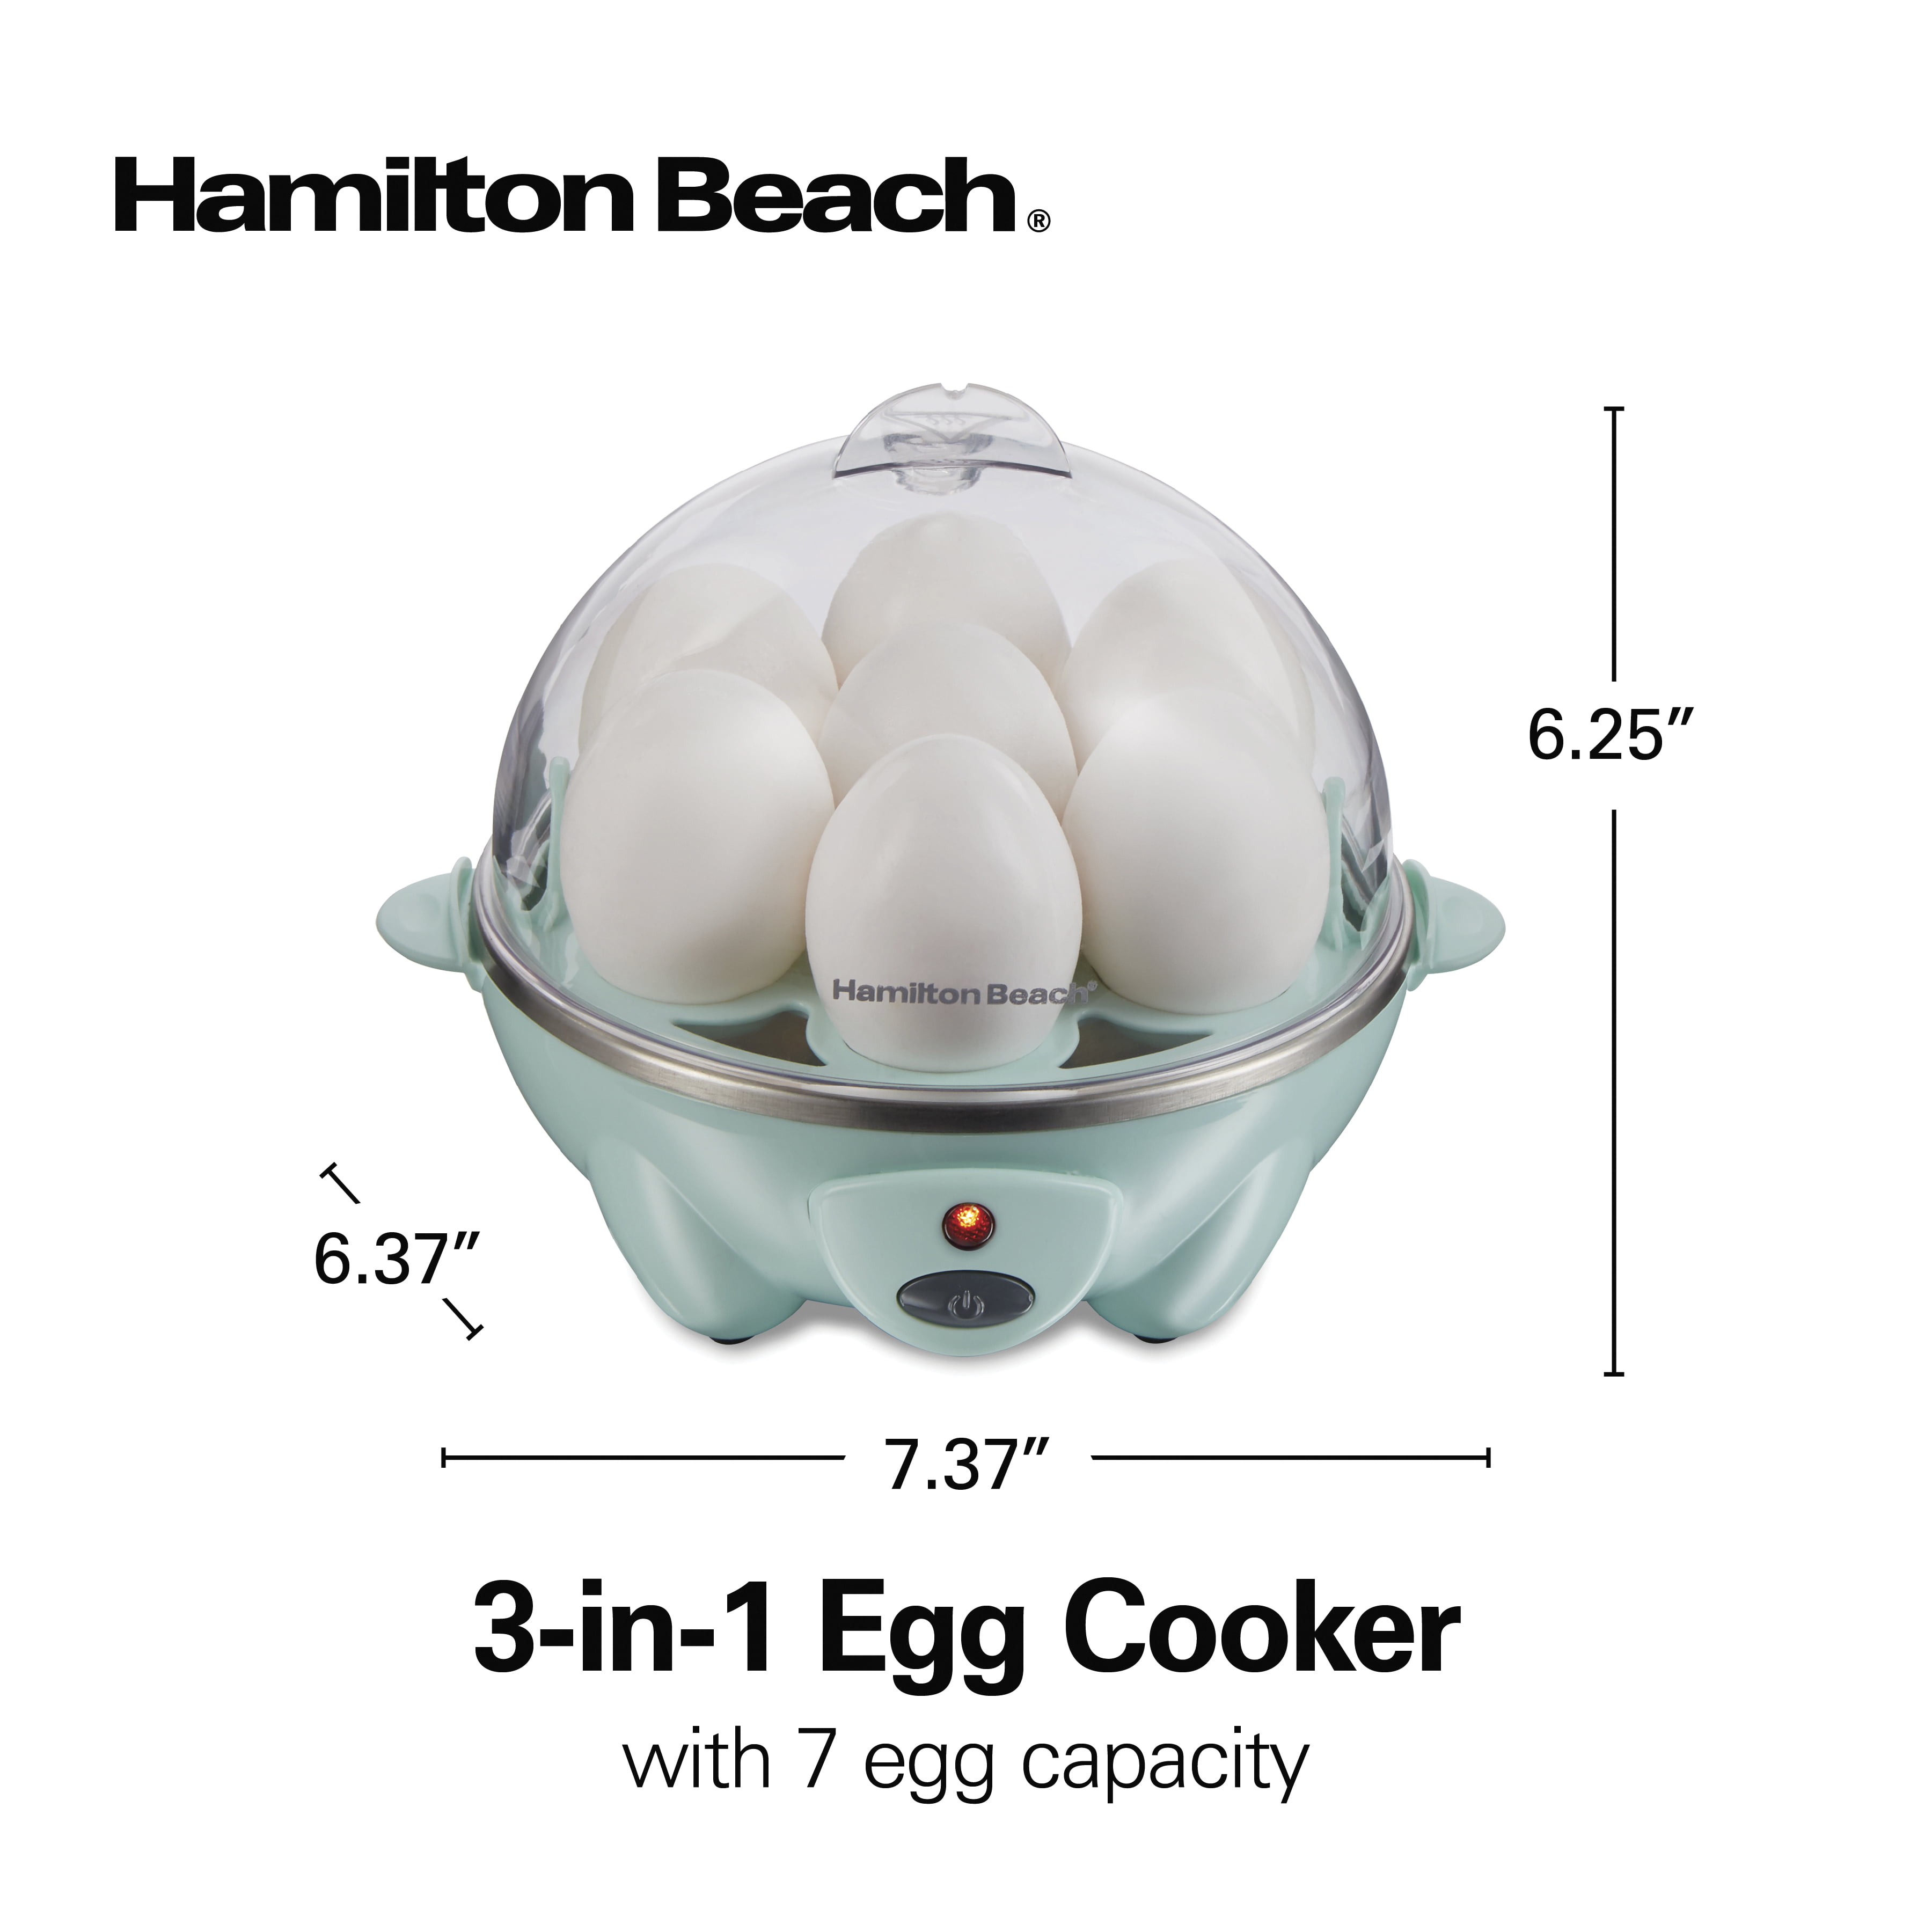 Hamilton Beach 3-in-1 Egg Cooker with 7 Egg Capacity, Teal - 25504